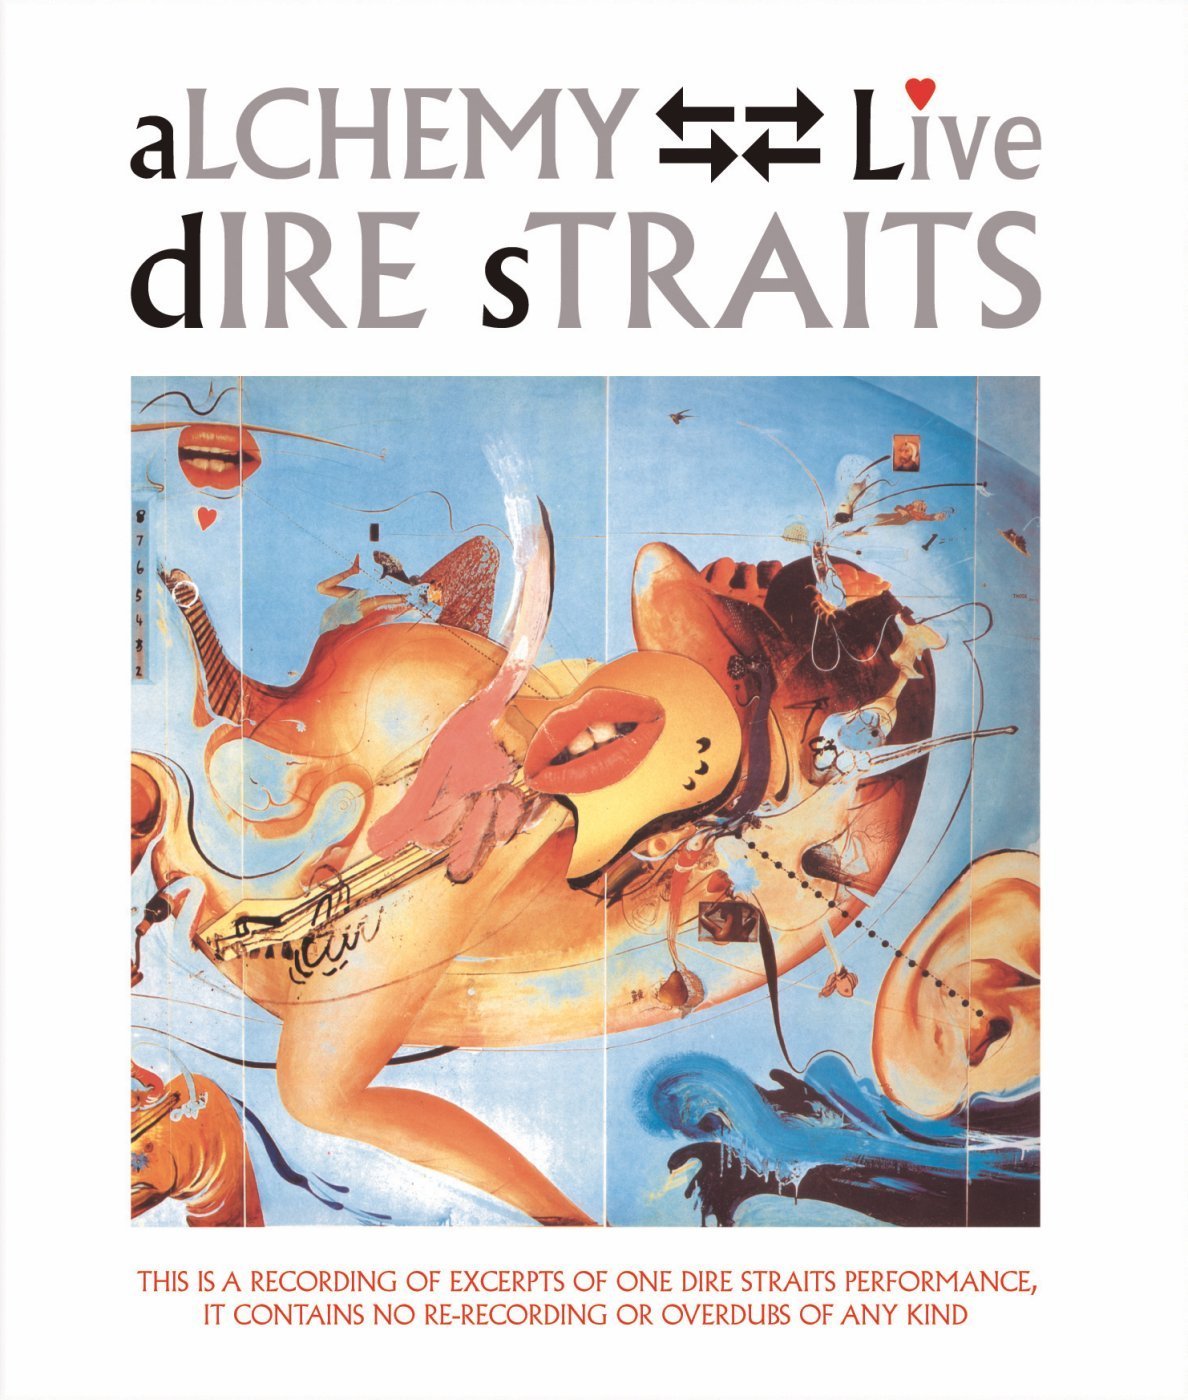 Recensione Dire Straits - Alchemy live